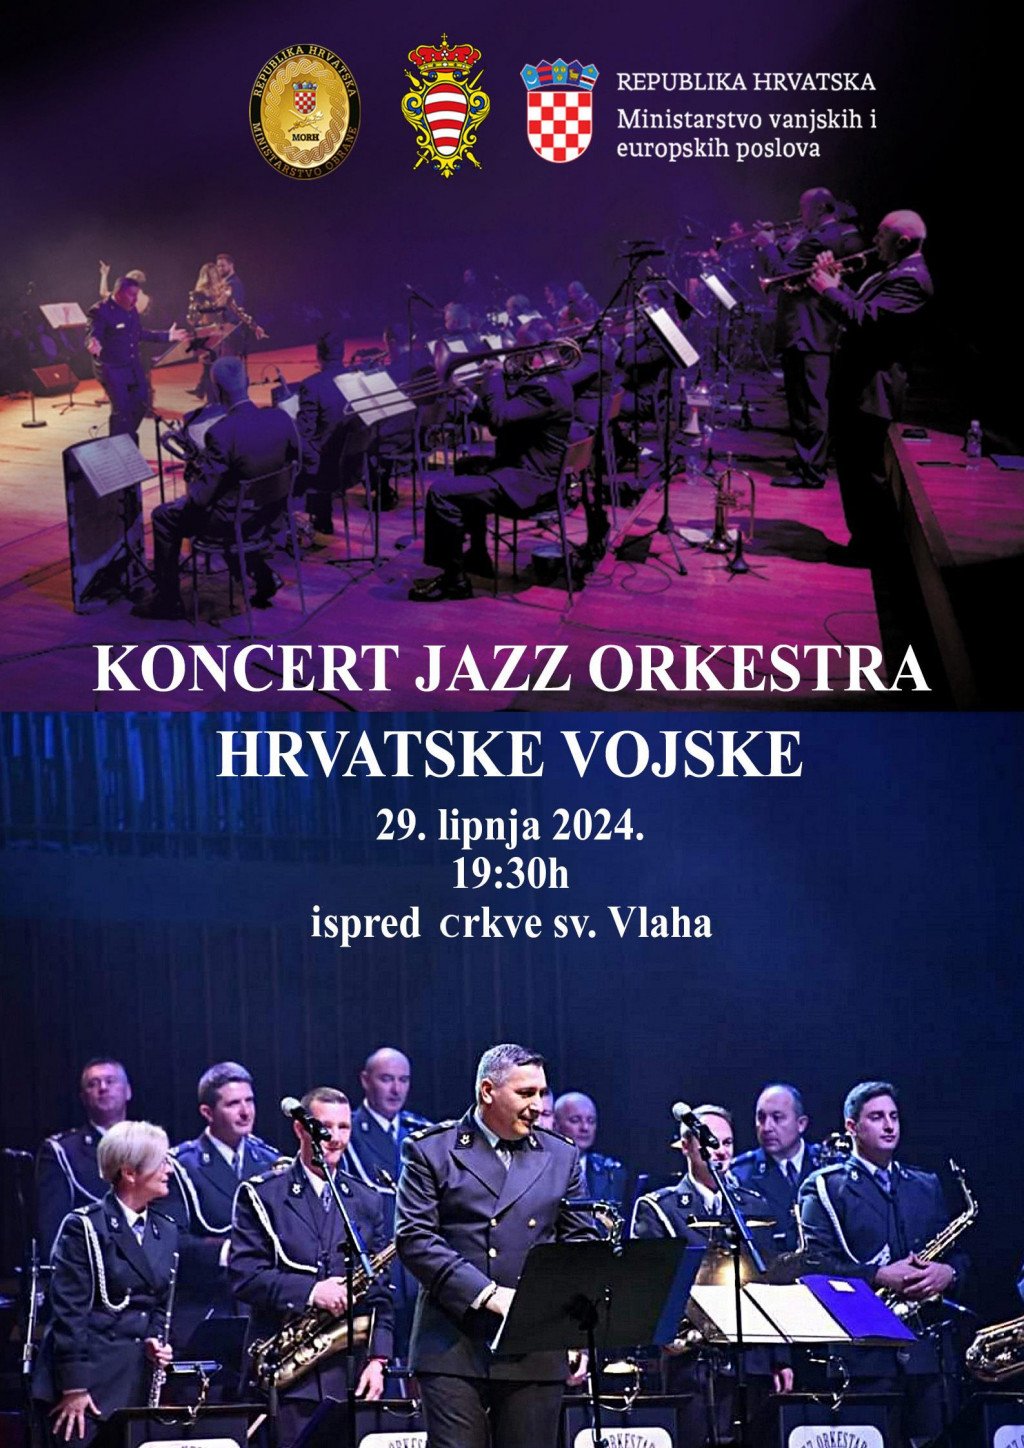 &lt;p&gt;Jazz orkestar Hrvatske vojske ispred crkve sv. Vlaha 29. lipnja&lt;/p&gt;